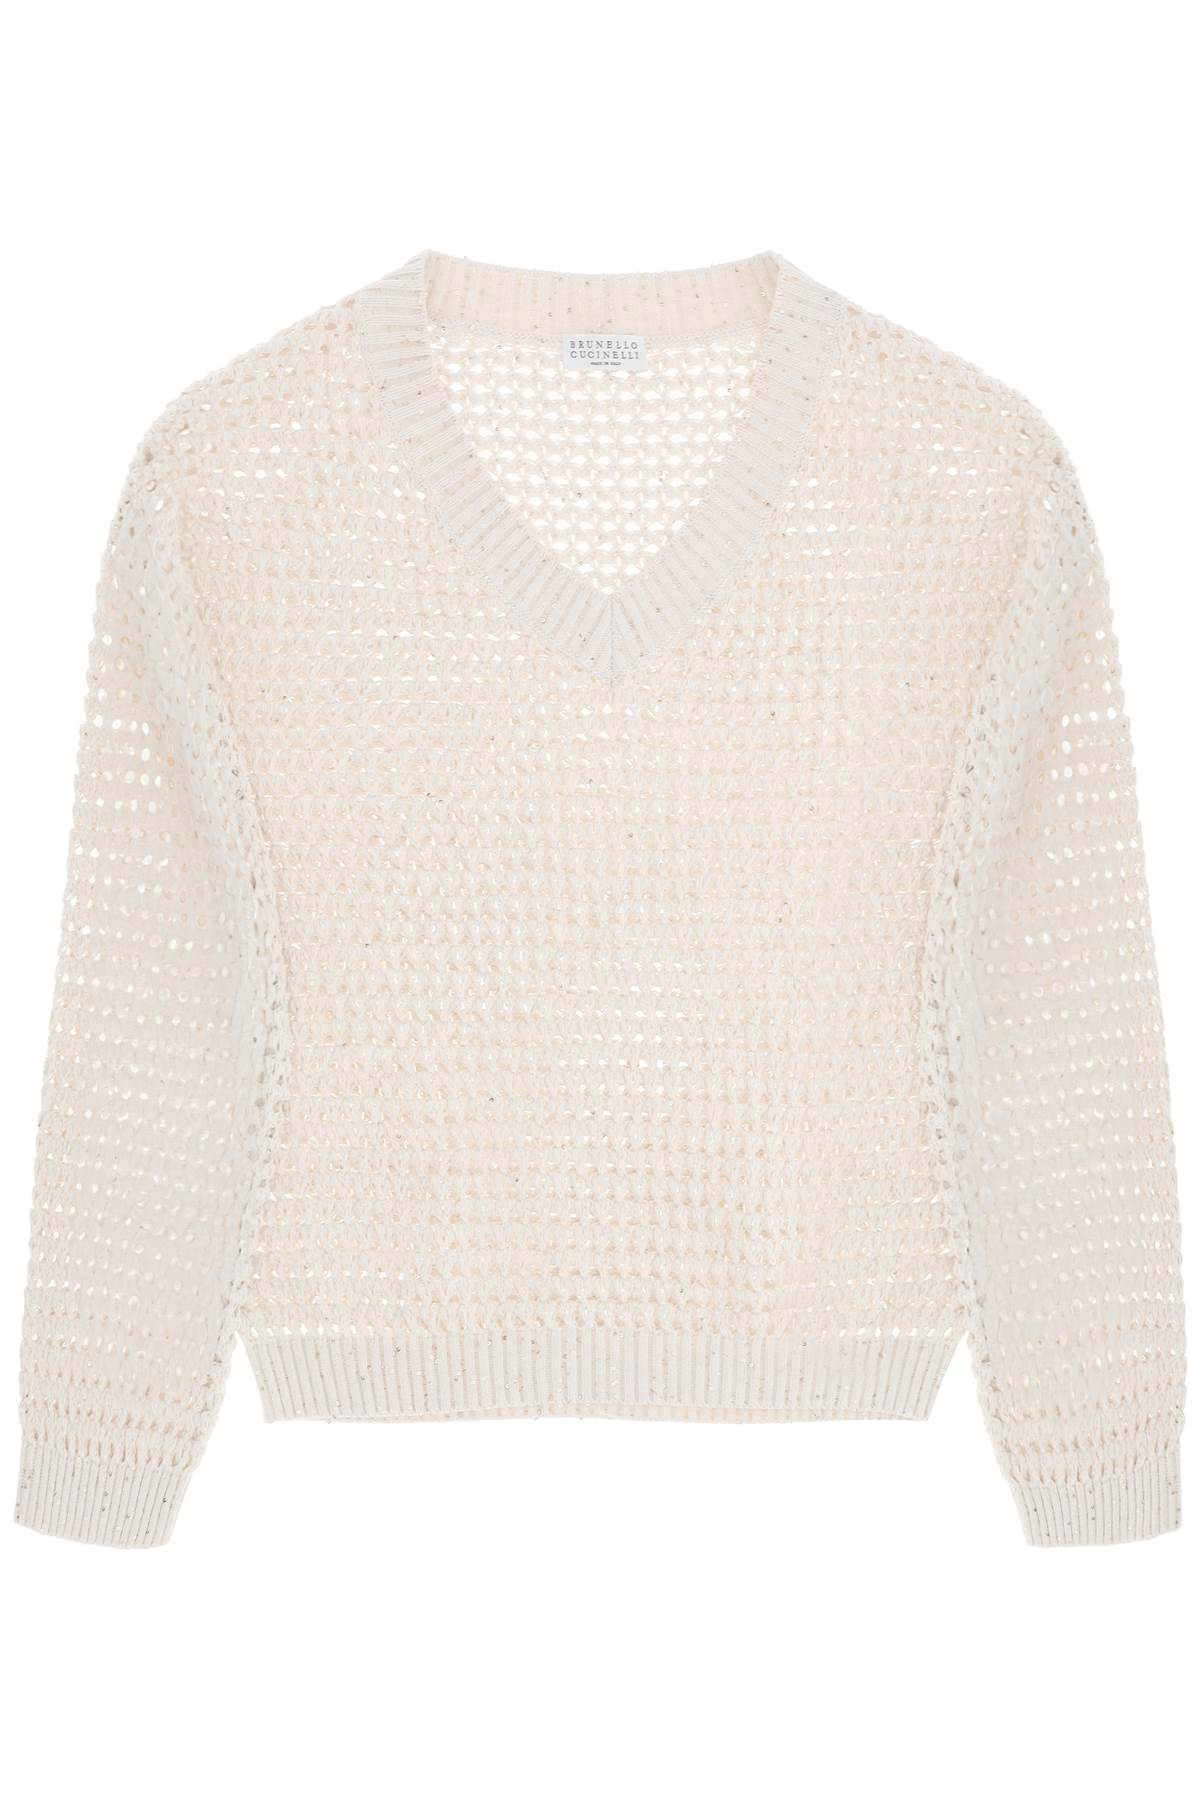 BRUNELLO CUCINELLI Dazzling Net Cotton Sweater for Women